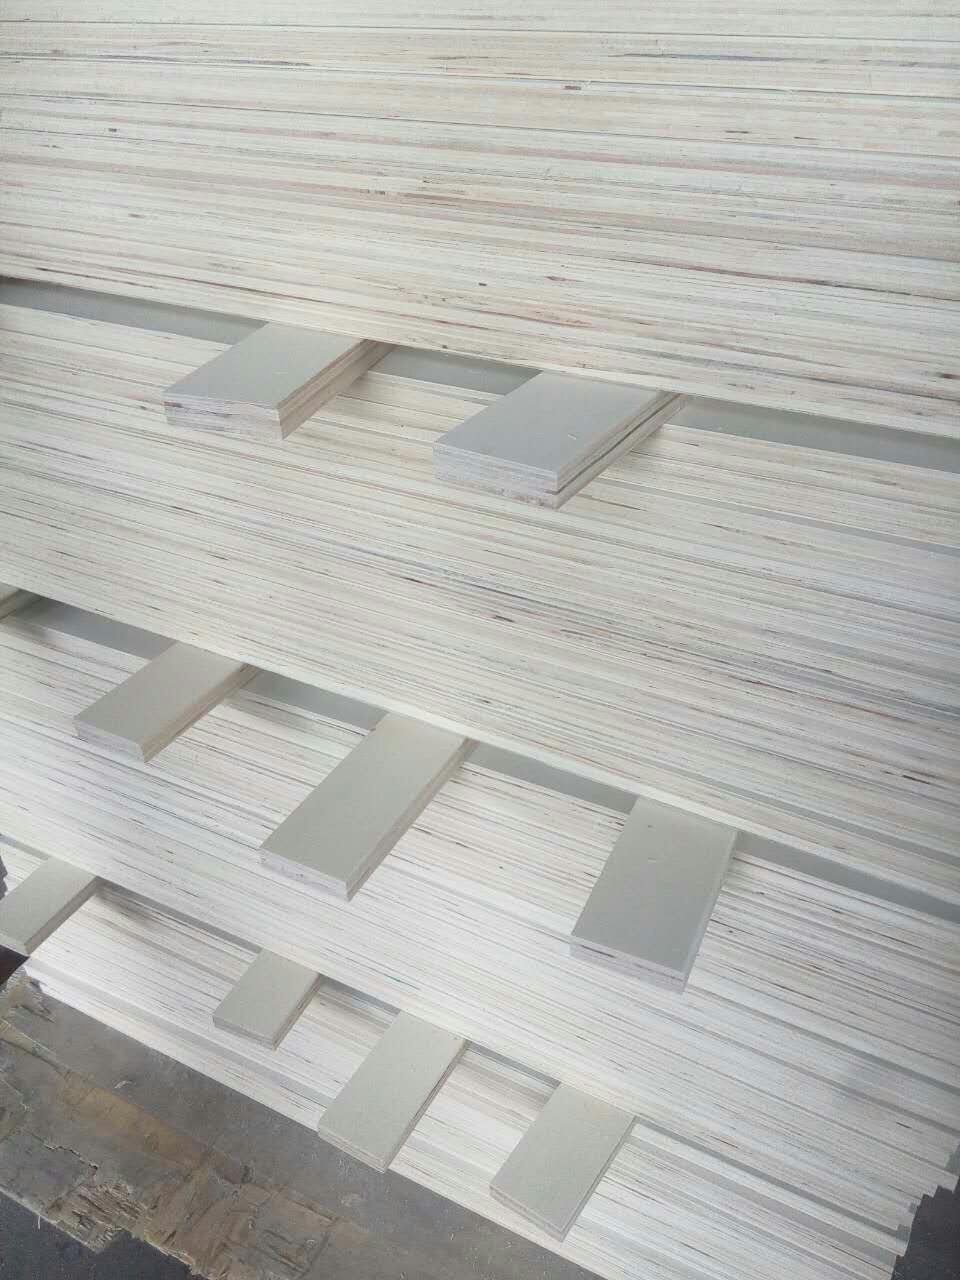 plywood bed slates